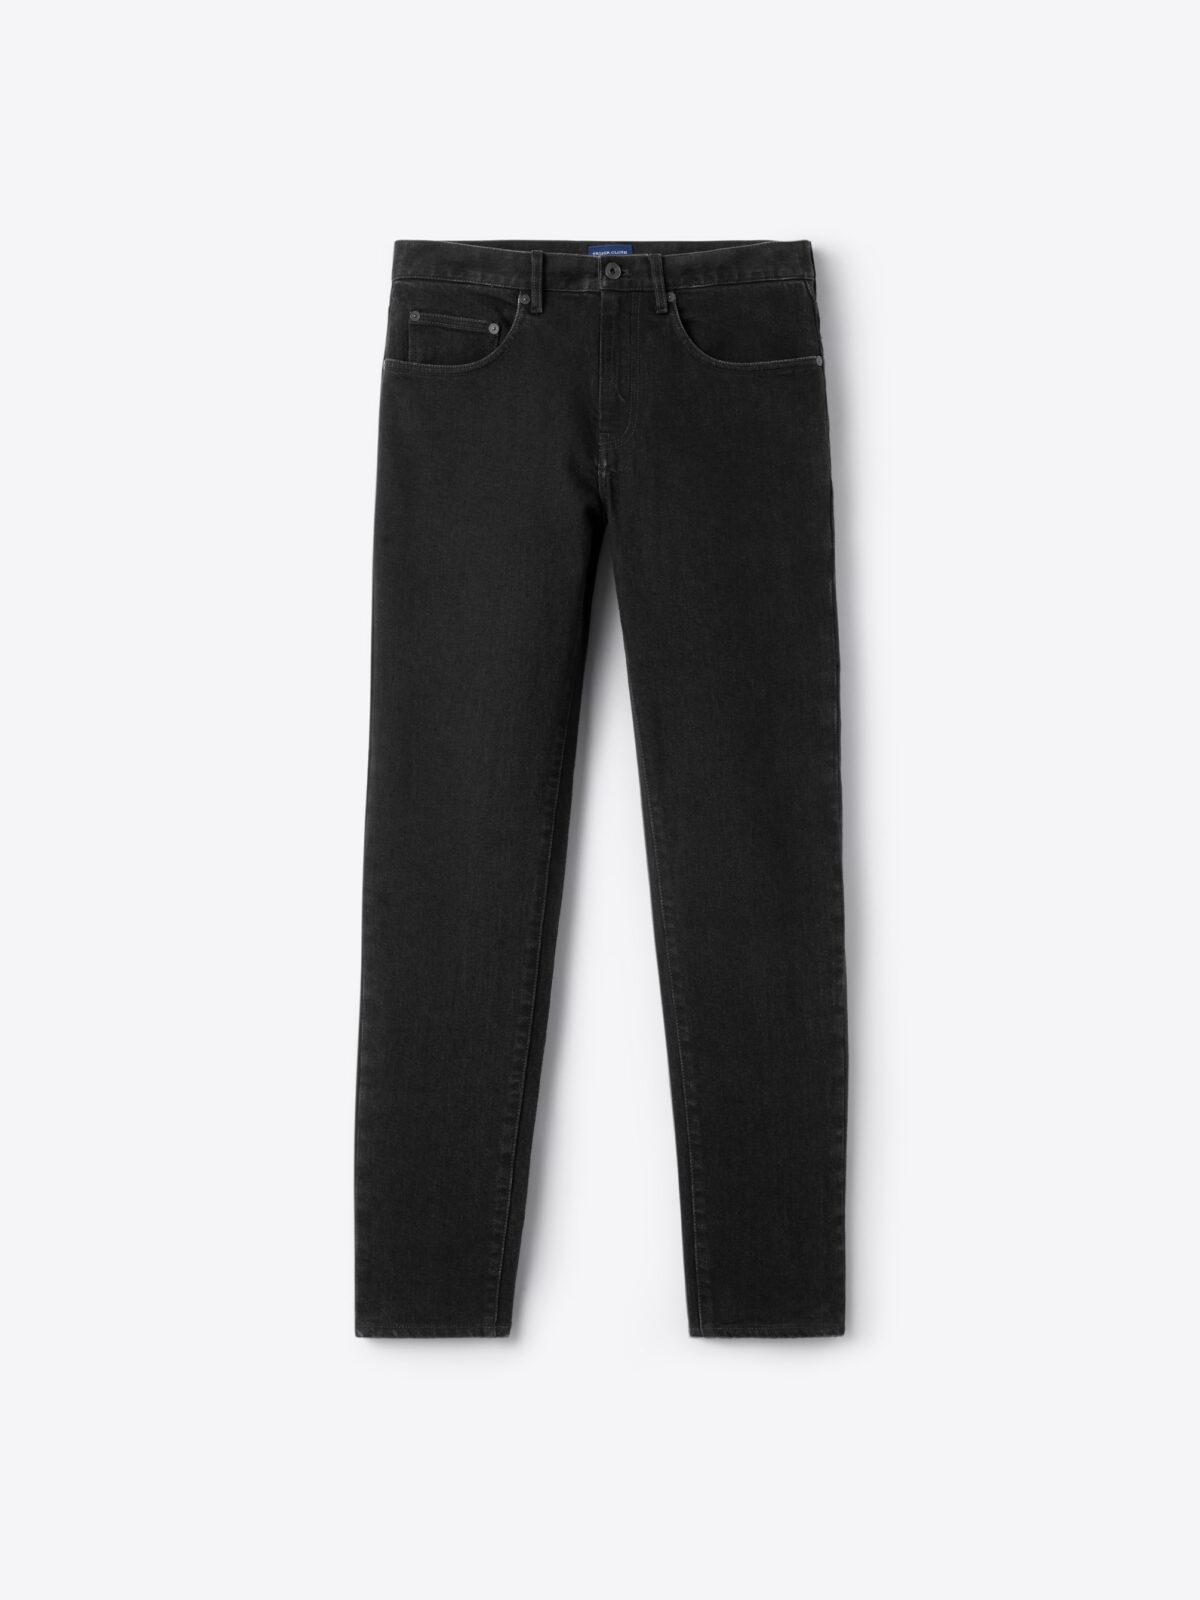 Japanese 12oz Rinse Wash Black Stretch Jeans - Custom Fit Pants